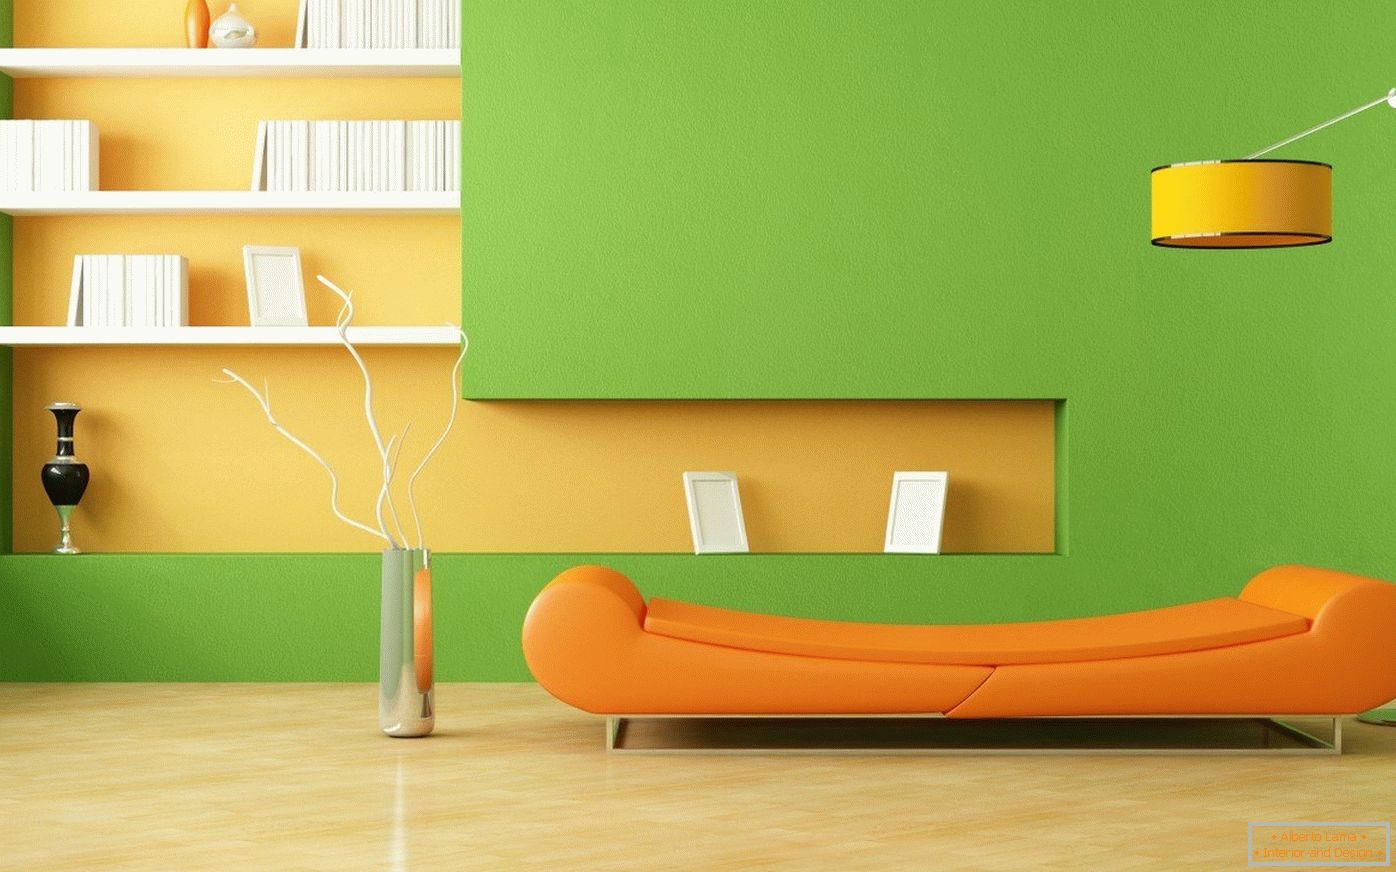 Sofá laranja e paredes verdes